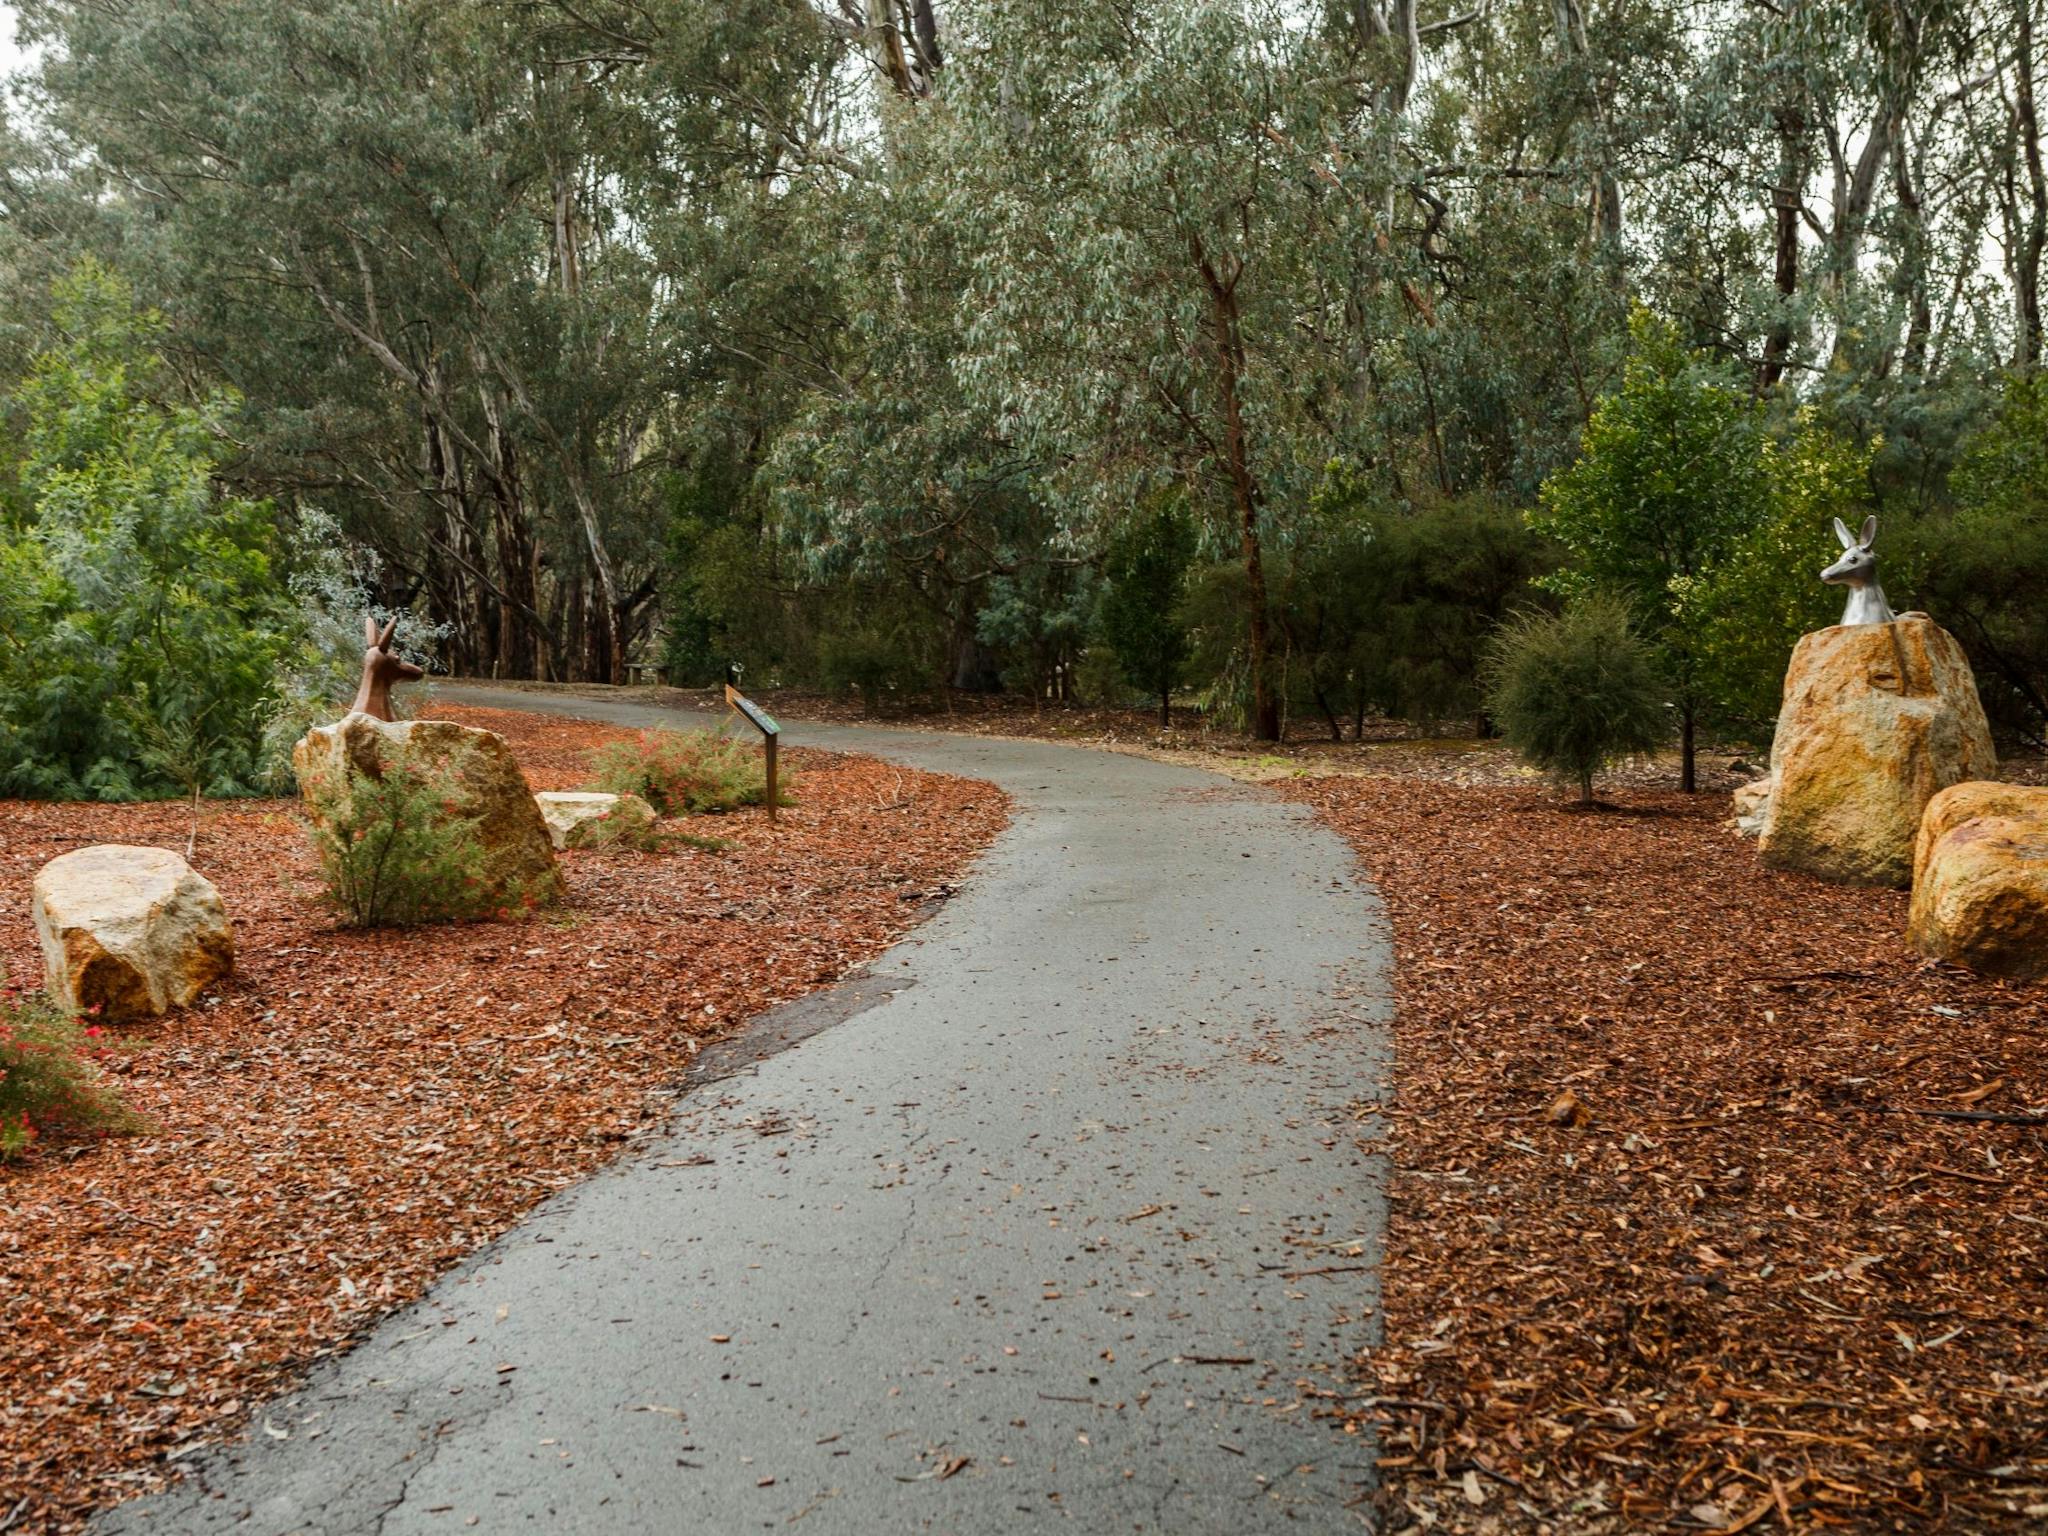 Path, bark chip along edges, rocks, kangaroo head sculptures, trees.